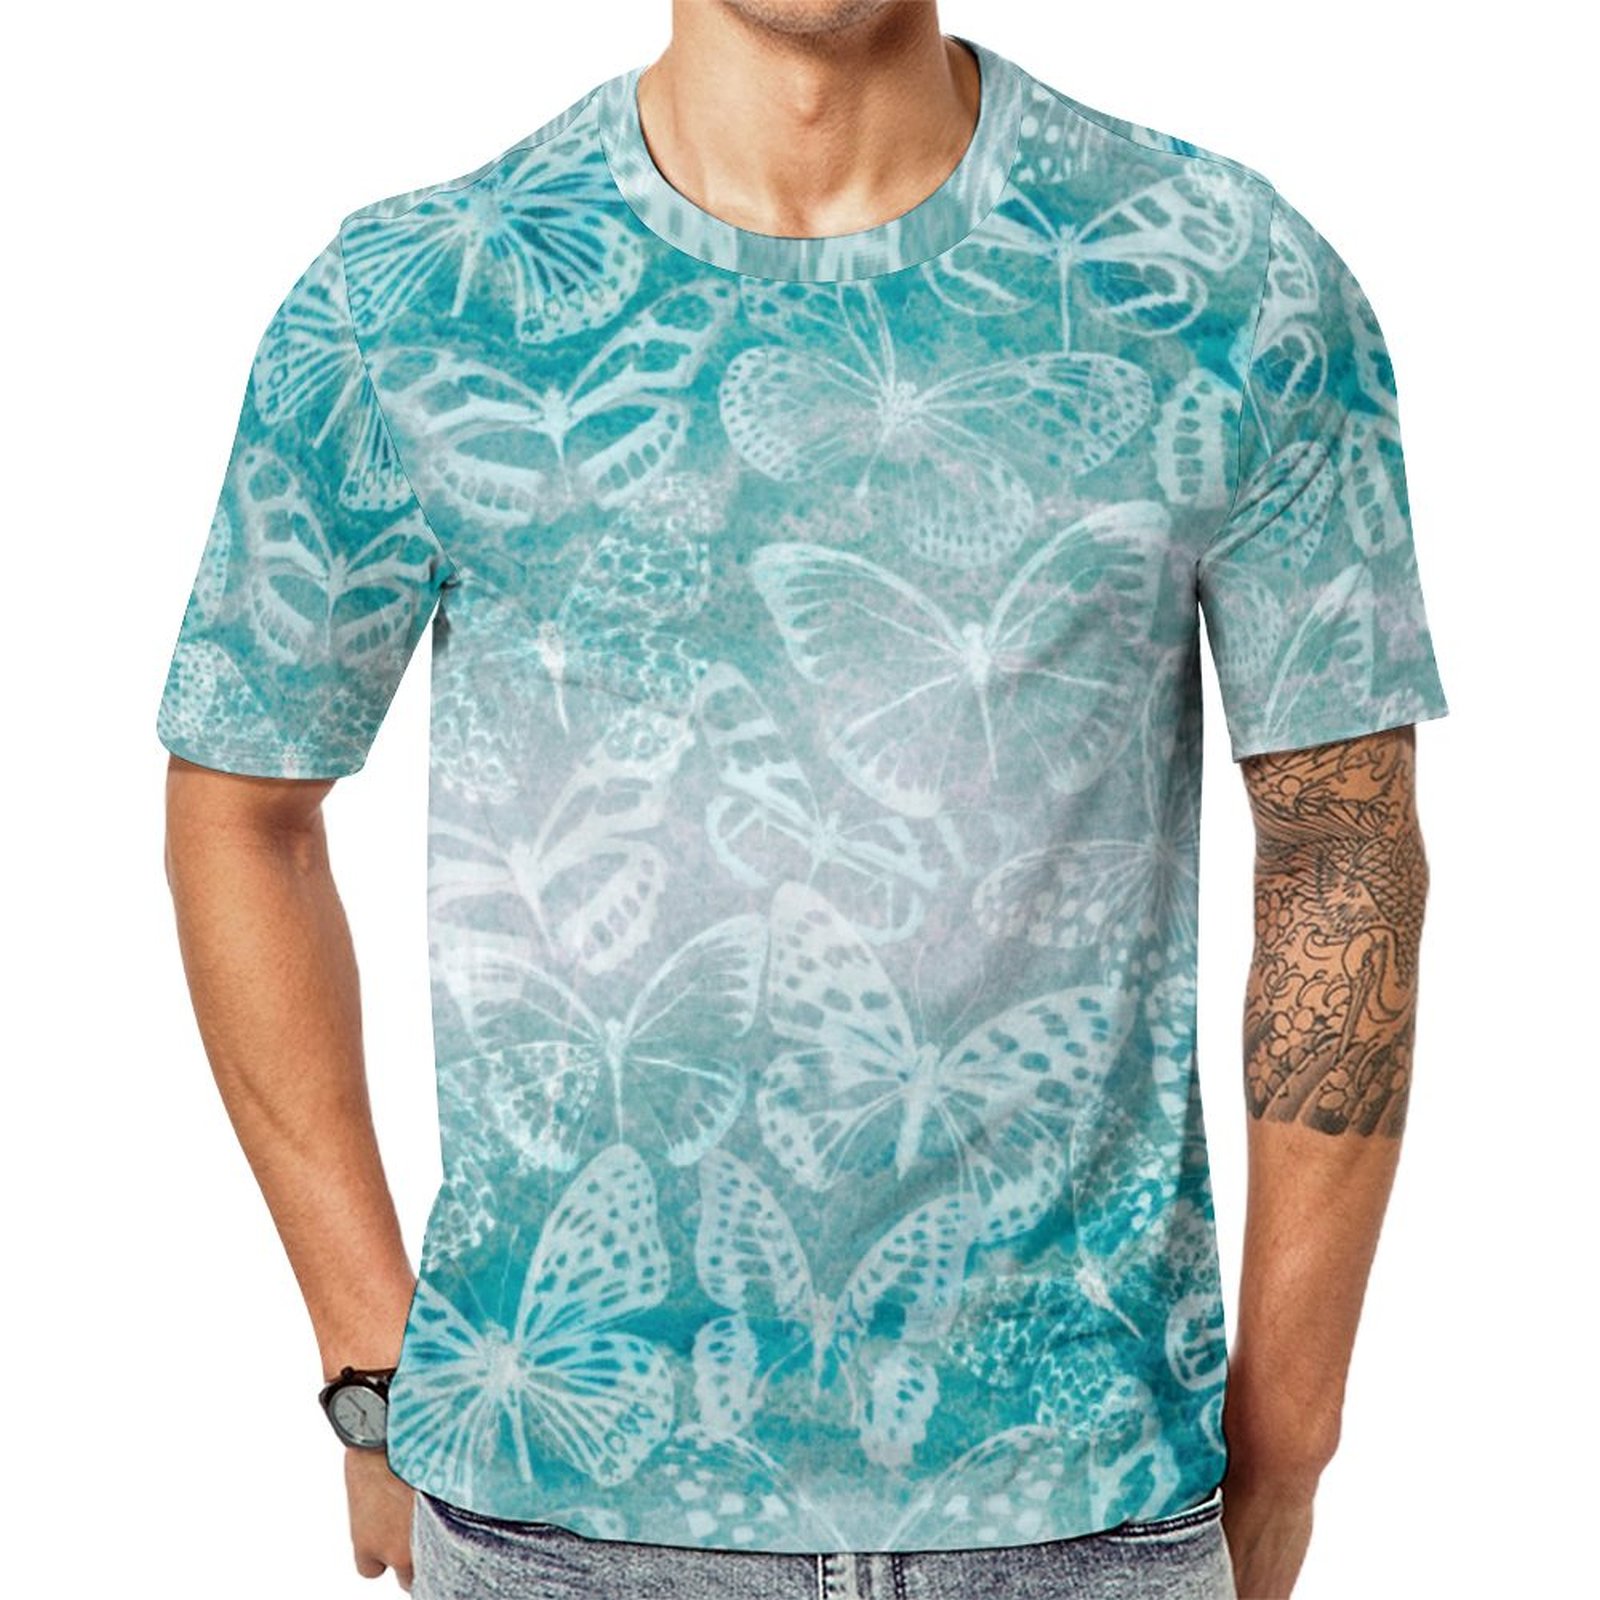 Sea Green Marble Butterflies Short Sleeve Print Unisex Tshirt Summer Casual Tees for Men and Women Coolcoshirts